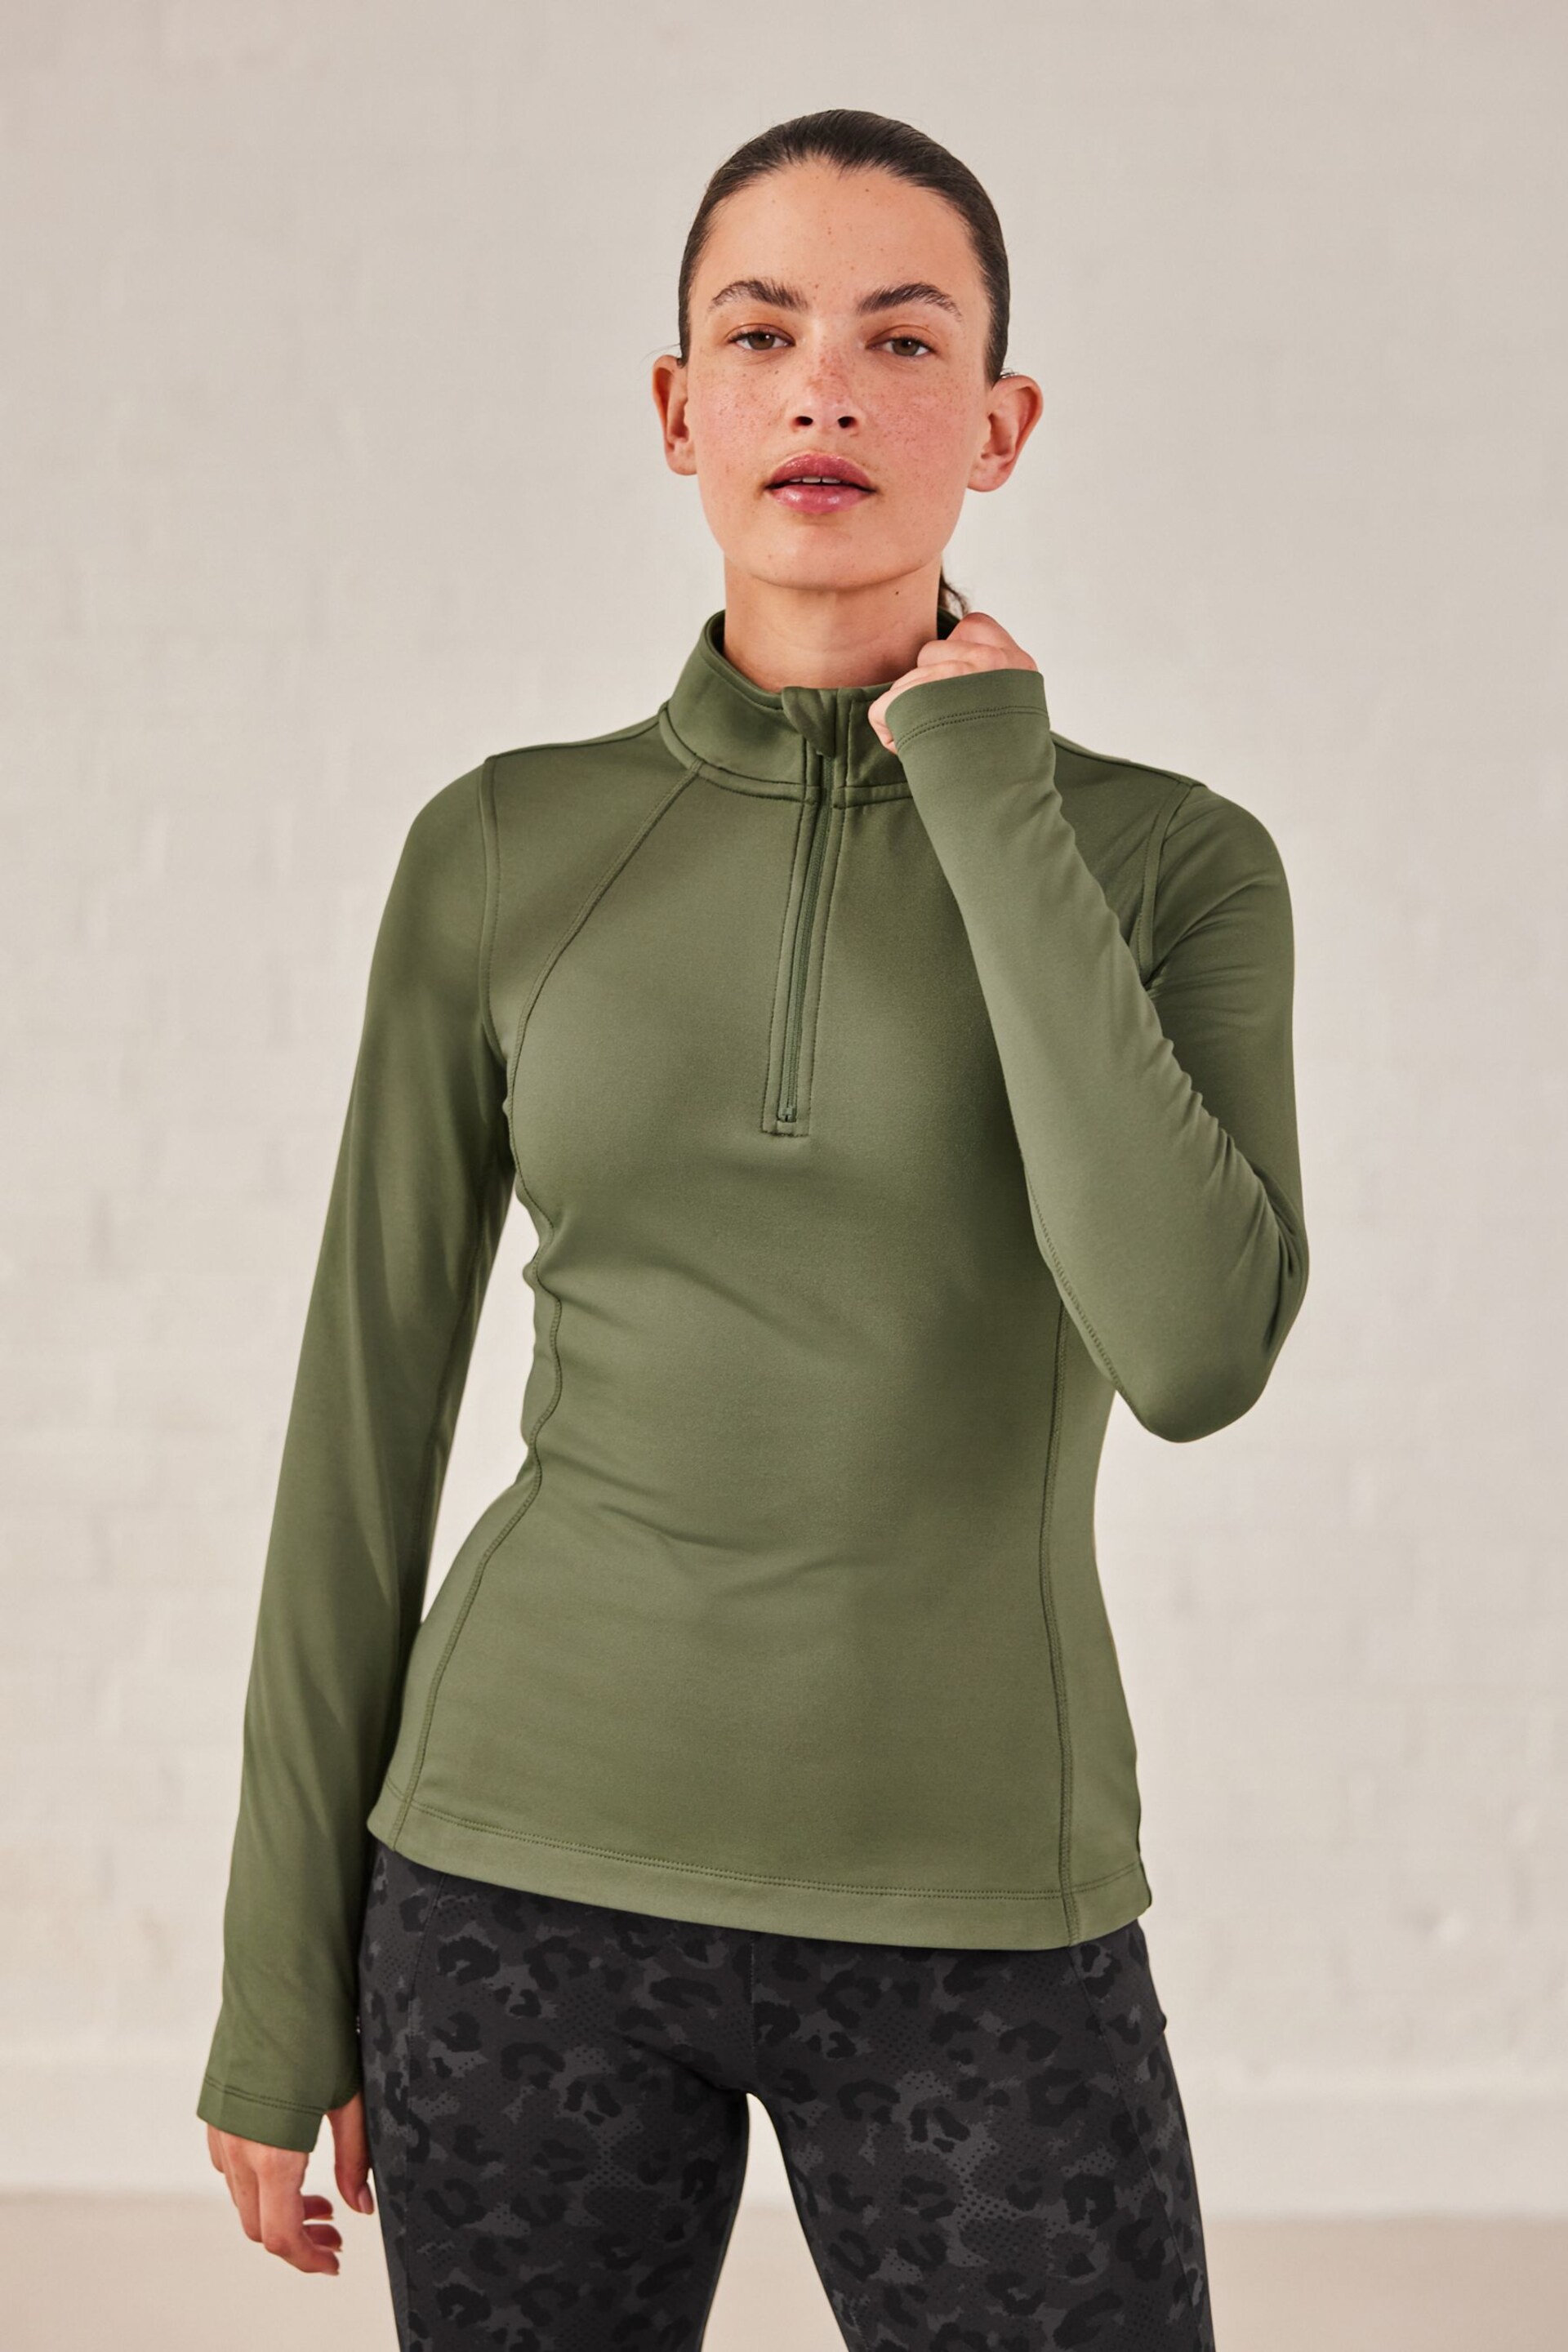 Khaki Green Elements Outdoor Fleece Lined Layer Top - Image 1 of 7